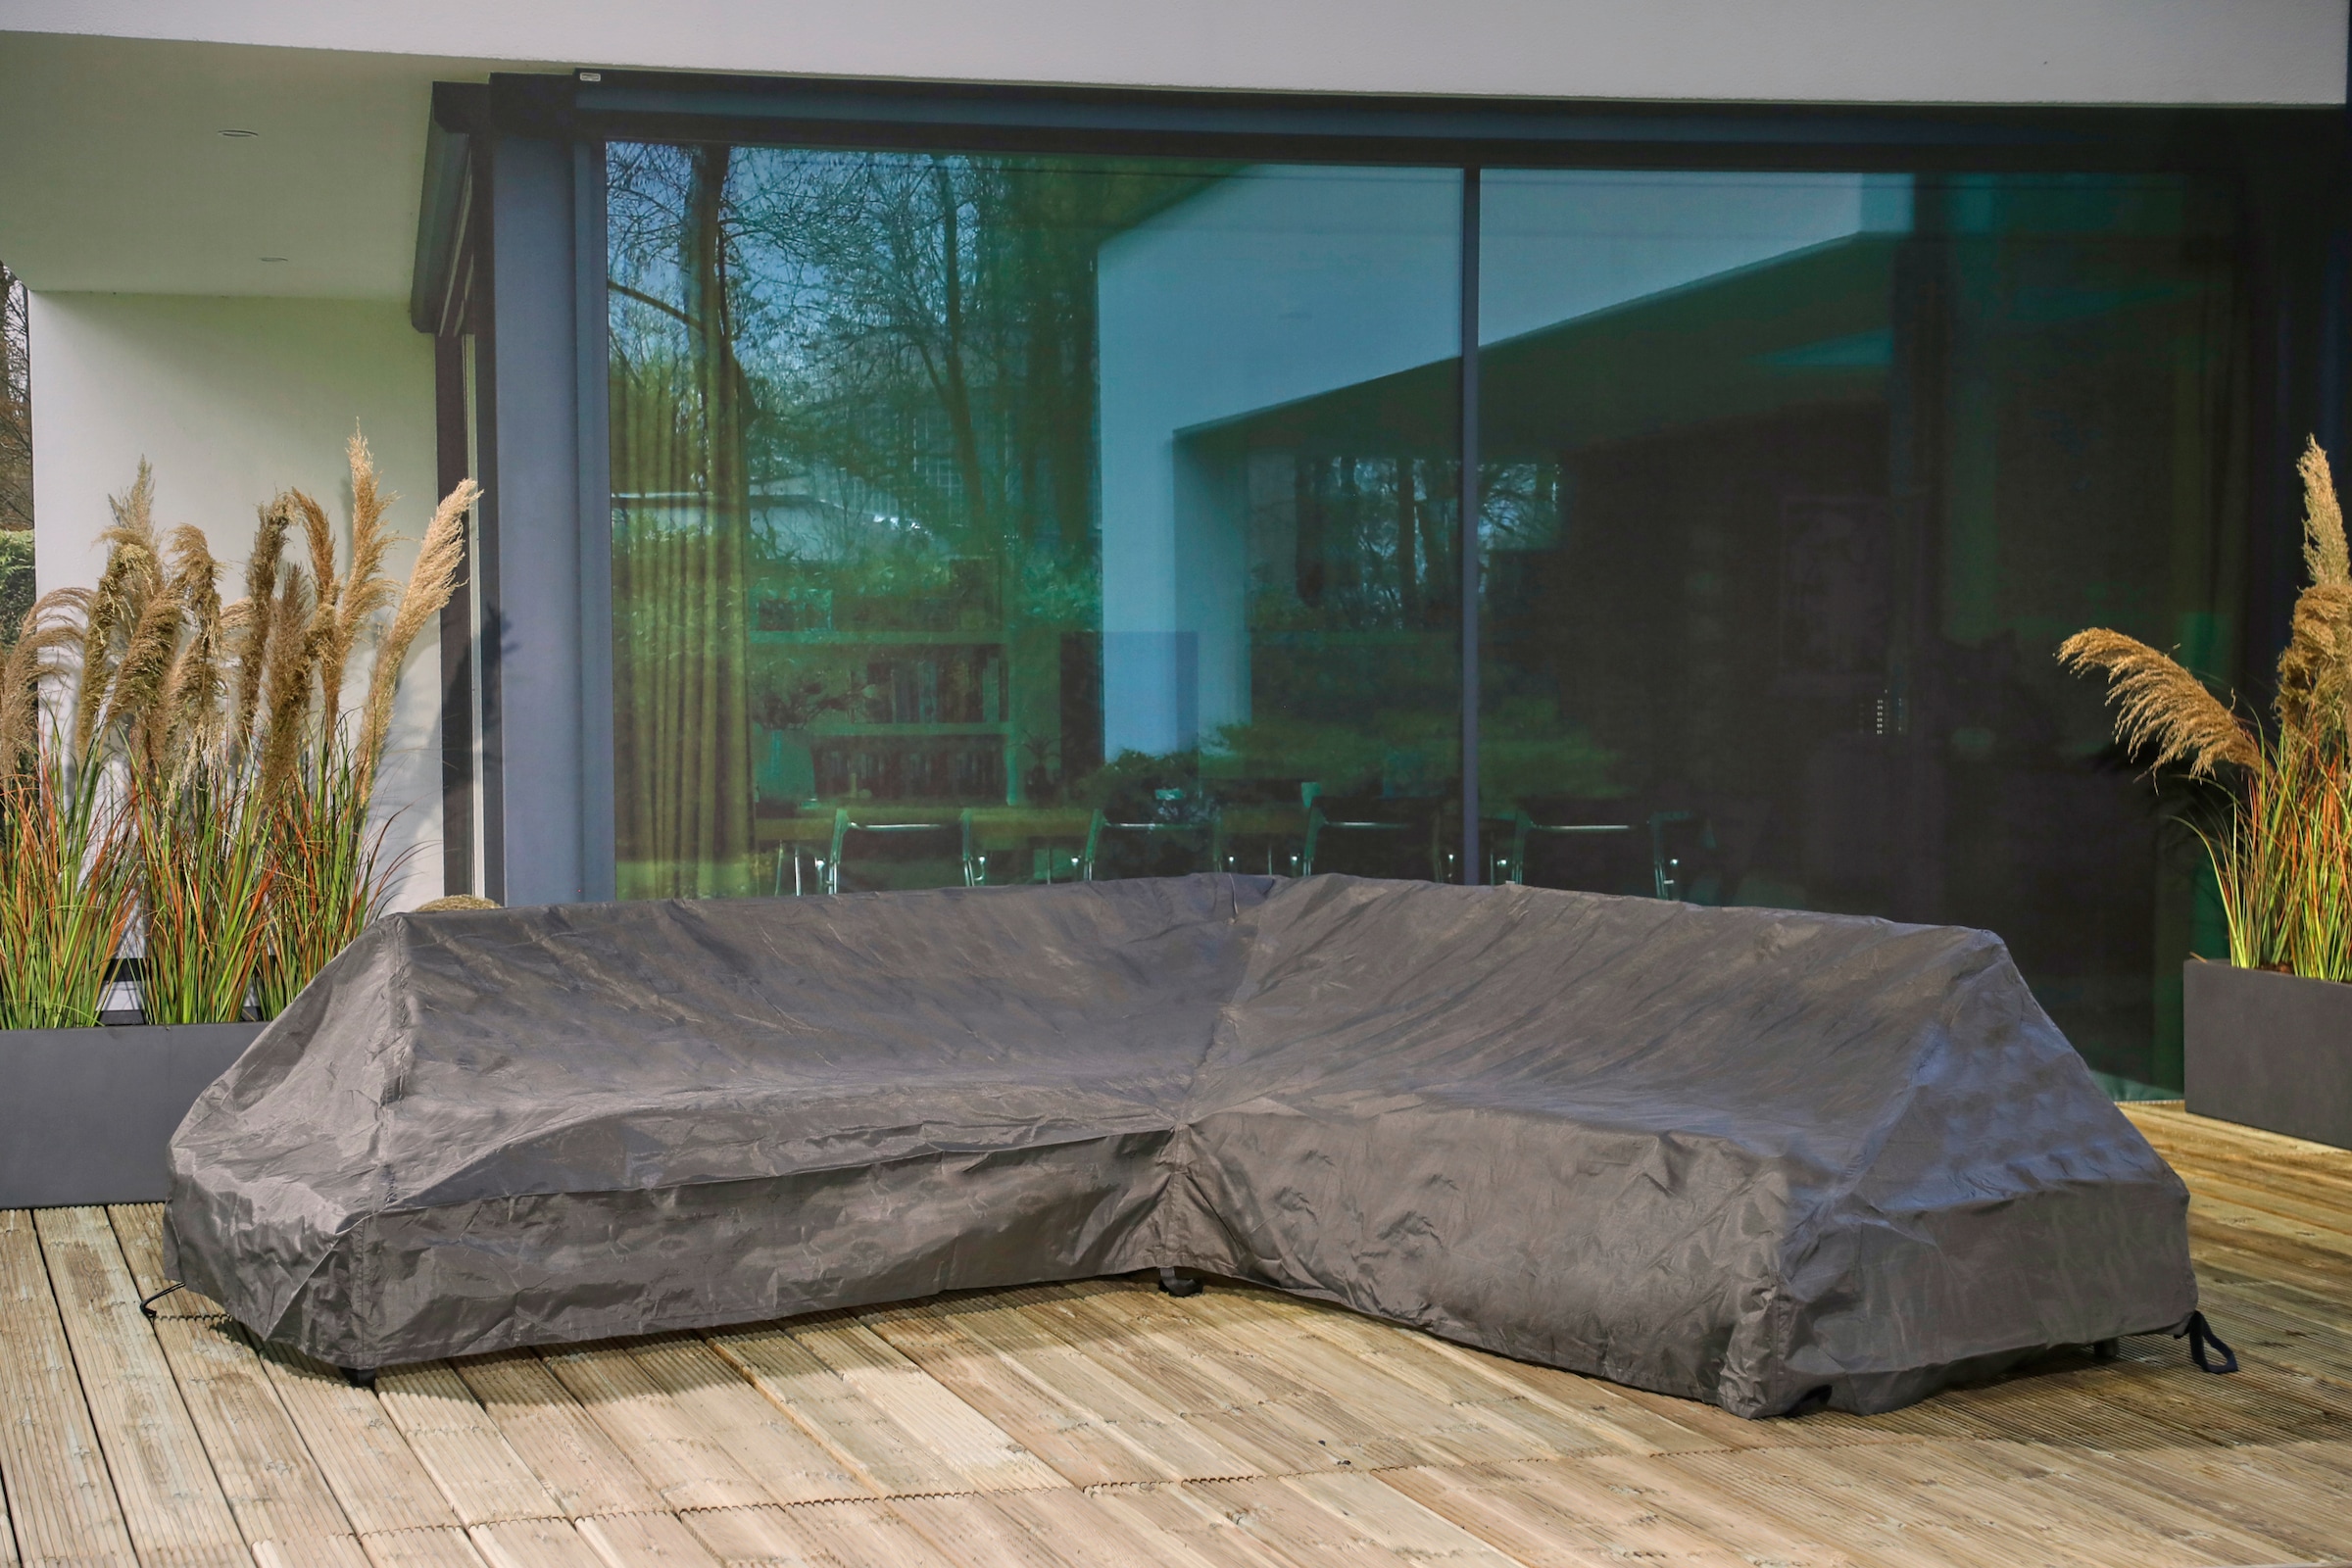 winza outdoor covers Gartenmöbel-Schutzhülle, geeignet für Loungeset